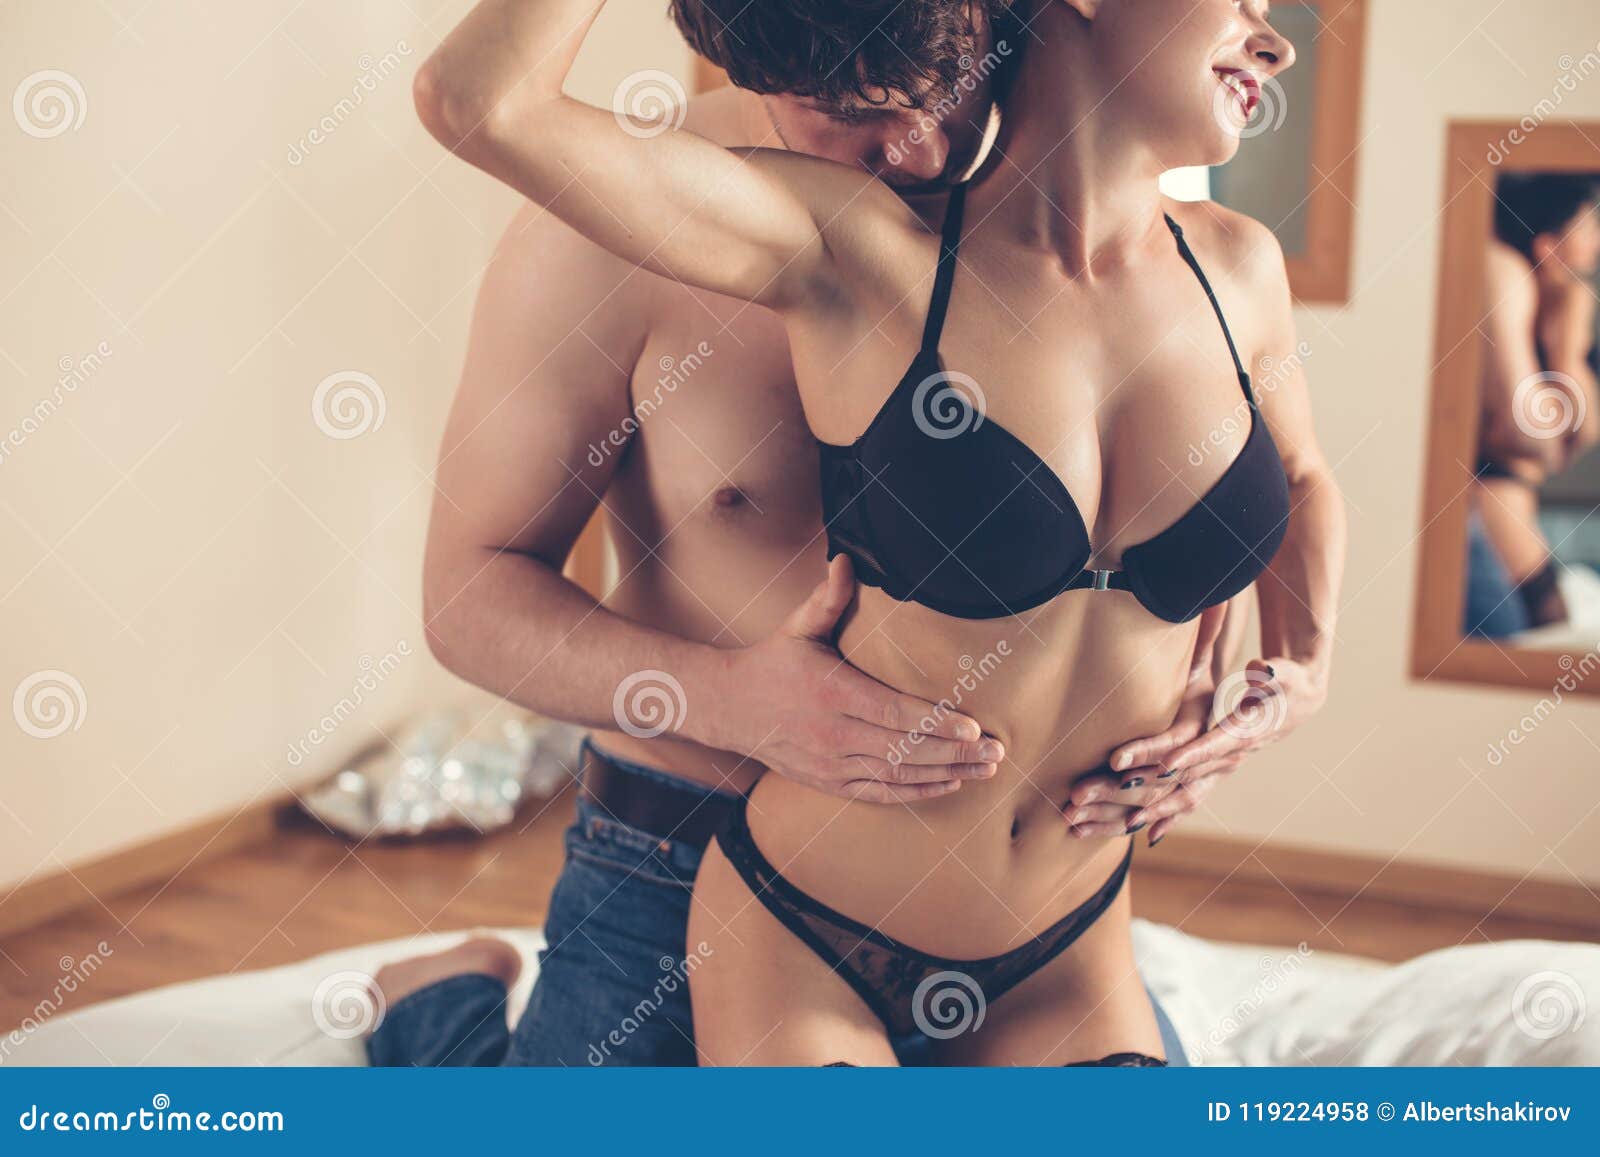 doug mattison share hot women in sex photos